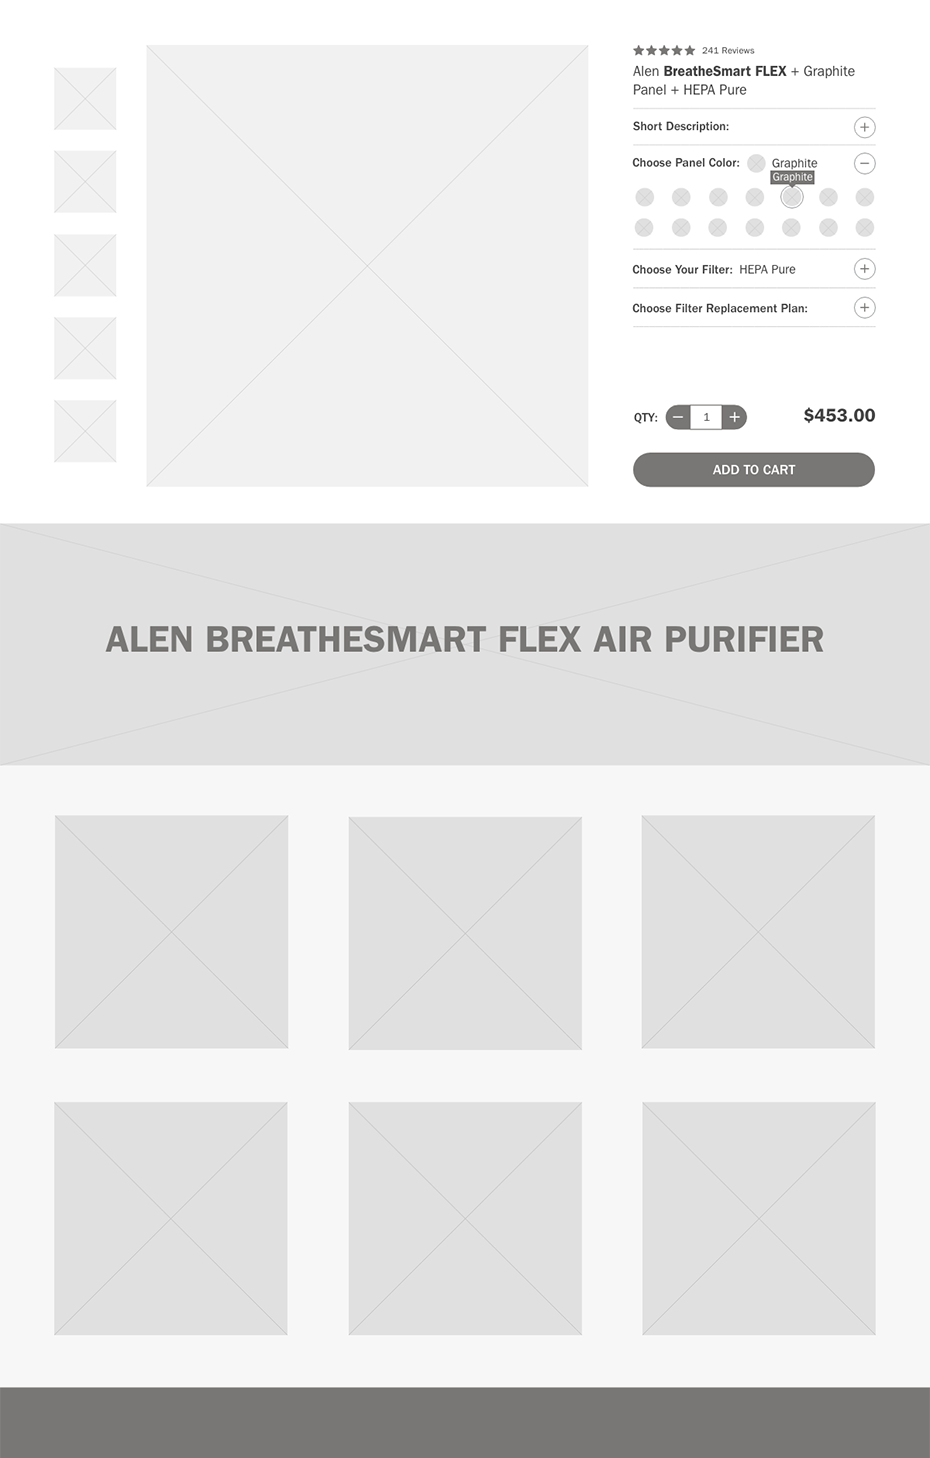 Alen BreatheSmart FLEX product page desktop wireframe